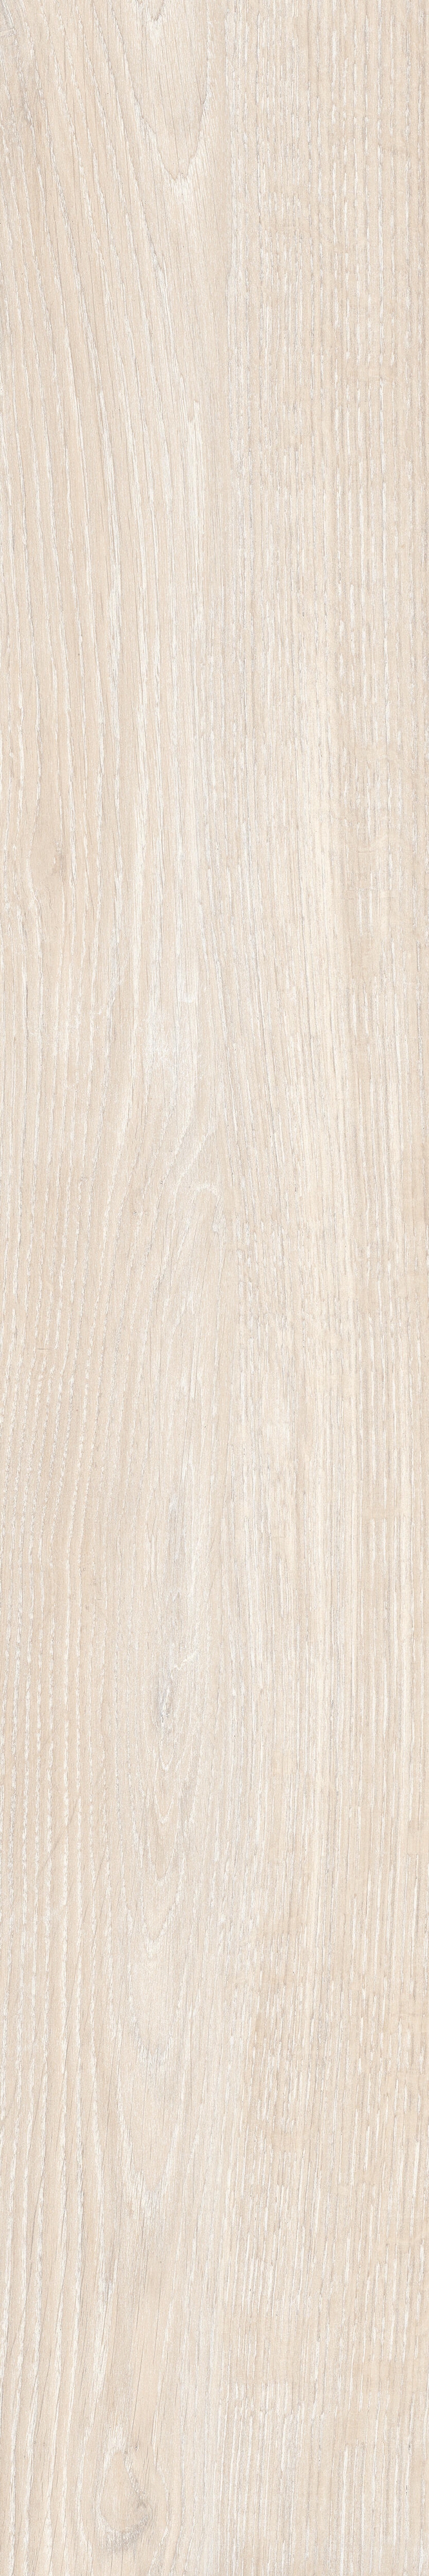 Piastrella da pavimento Cottage ivor 20 x 120 cm sp. 9.5 mm PEI 5/5 avorio - 2